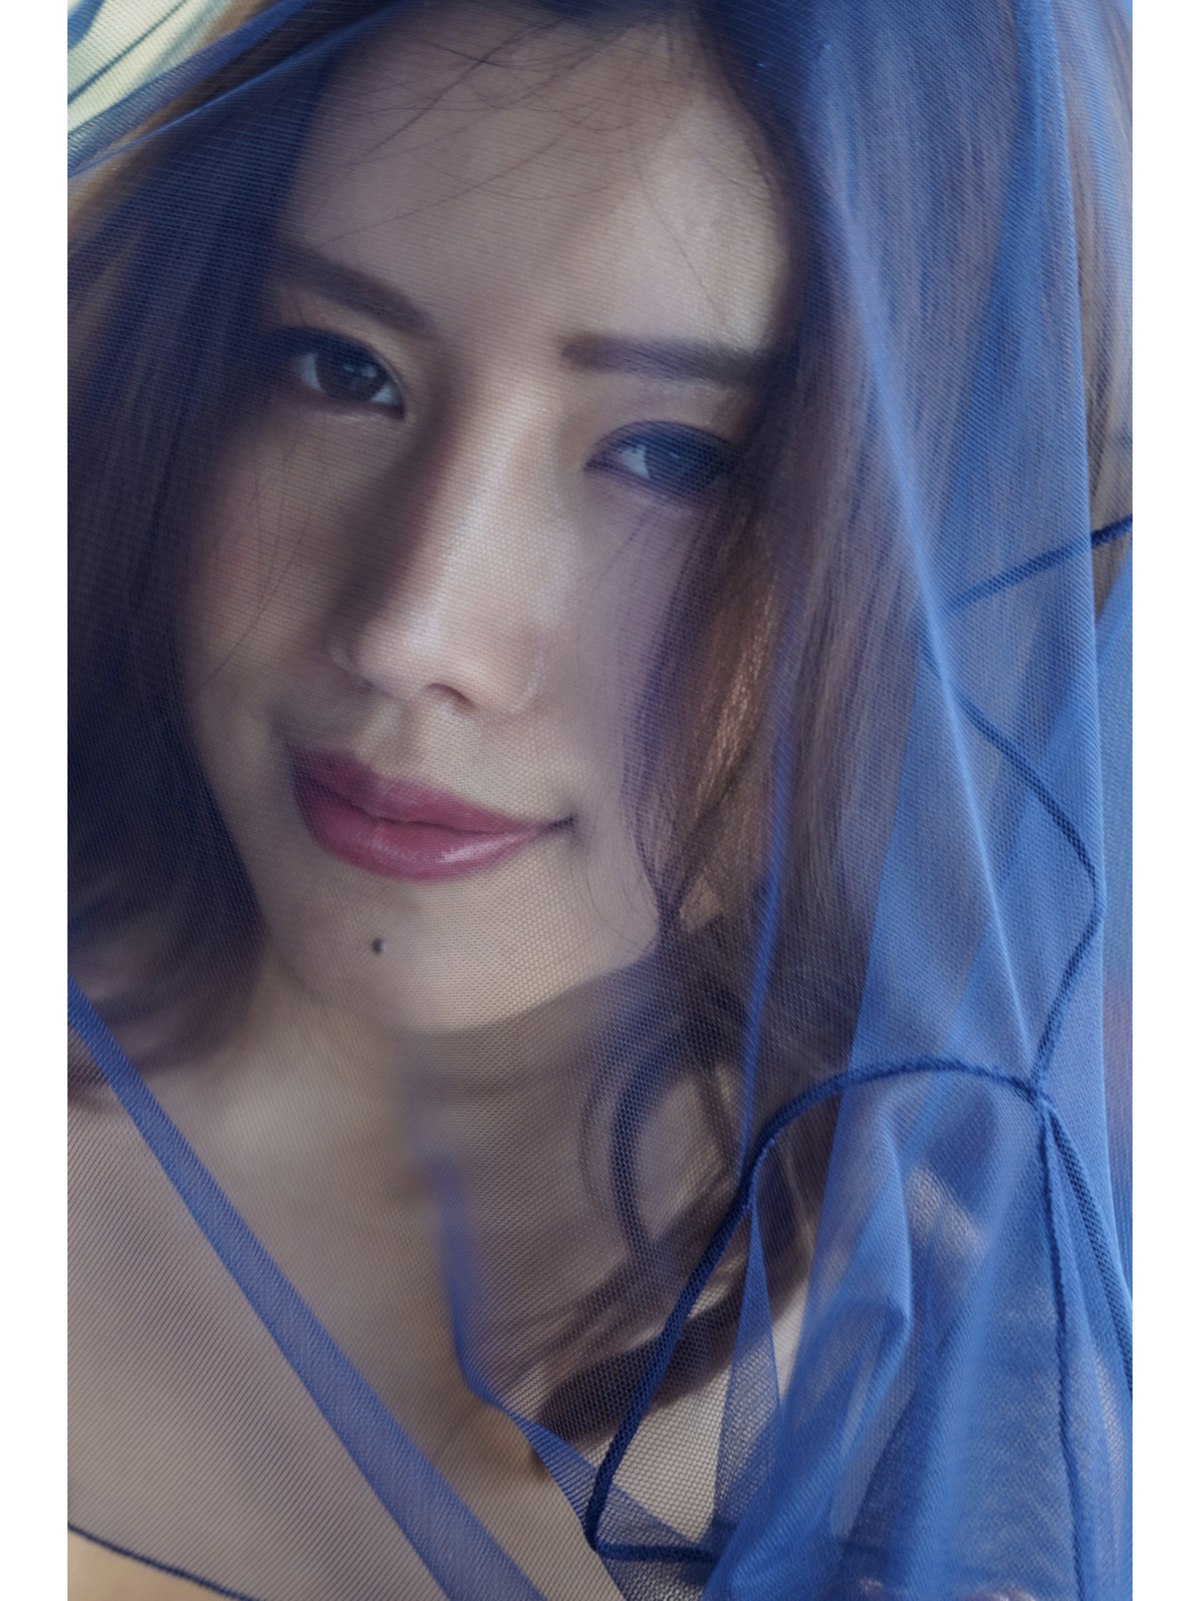 Photobook-グラマリア-Nagai-Maria-井マリア-Gravure-Photobook-0016-7095189611.jpg